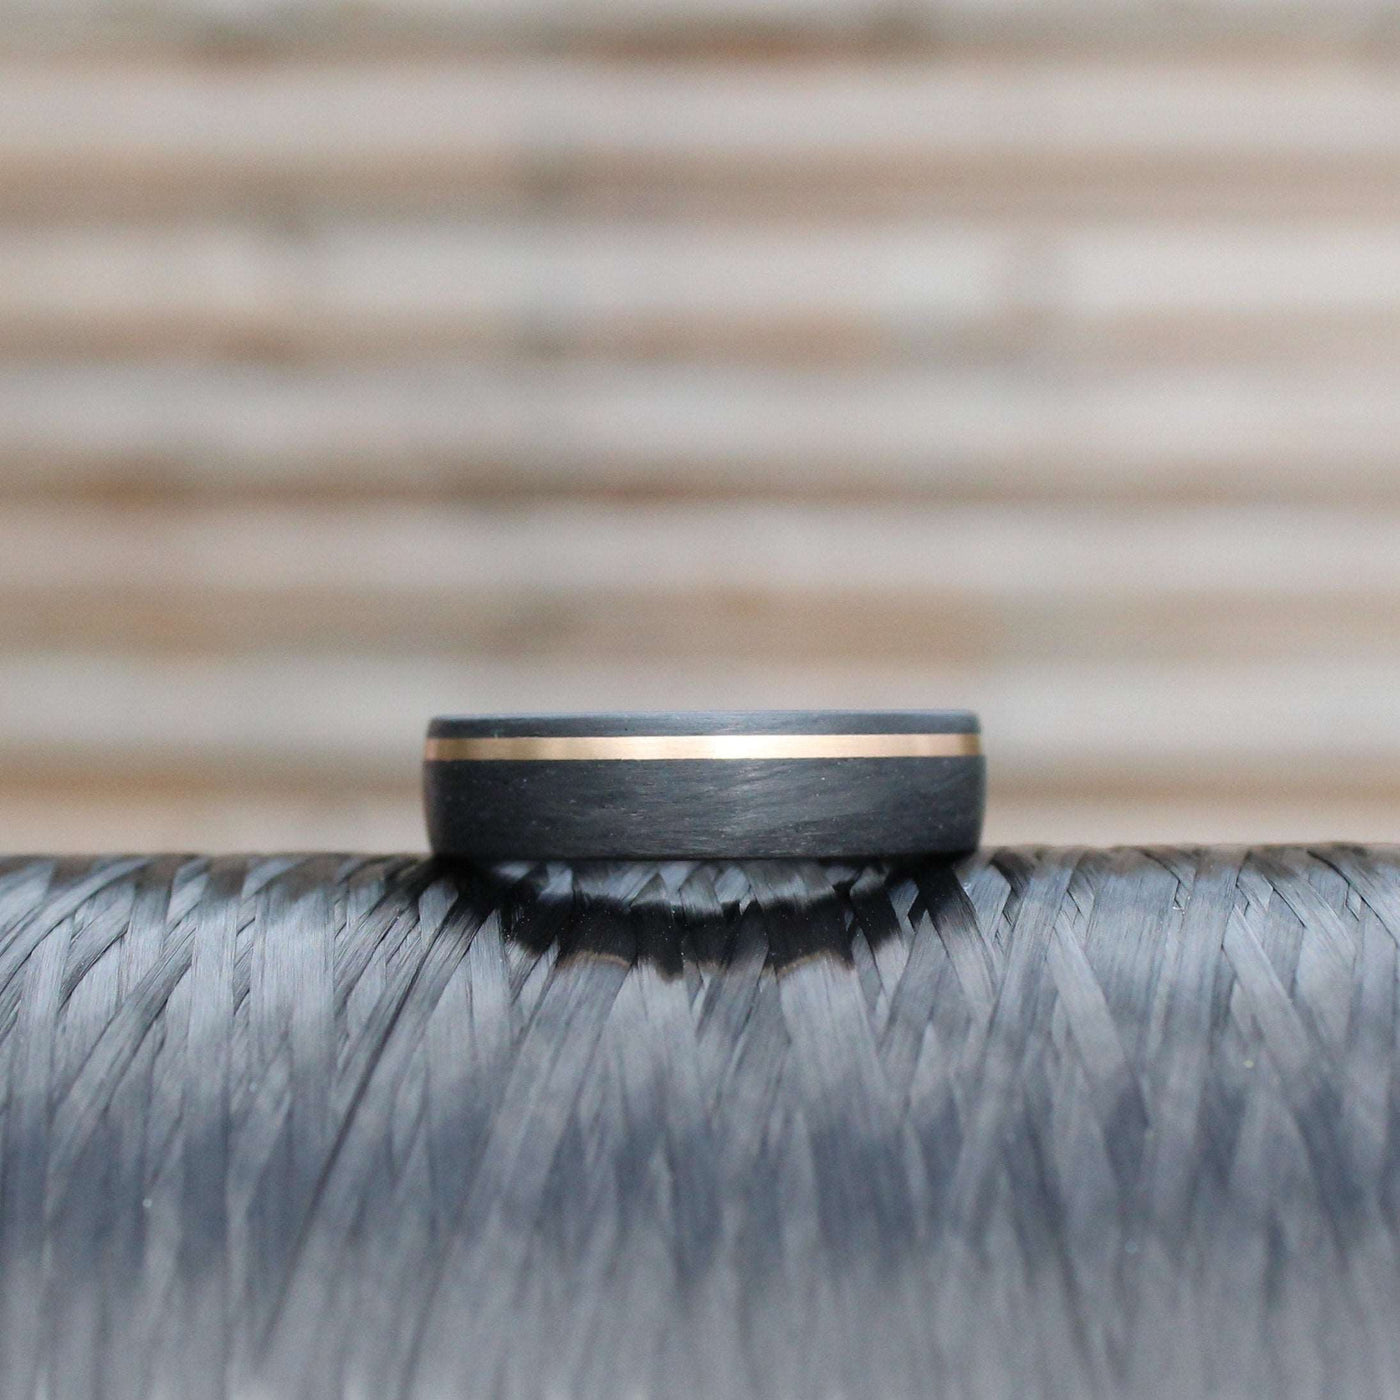 black carbon fibre wedding ring band. 6mm wide with a stripe of rose gold. black mans wedding ring uk